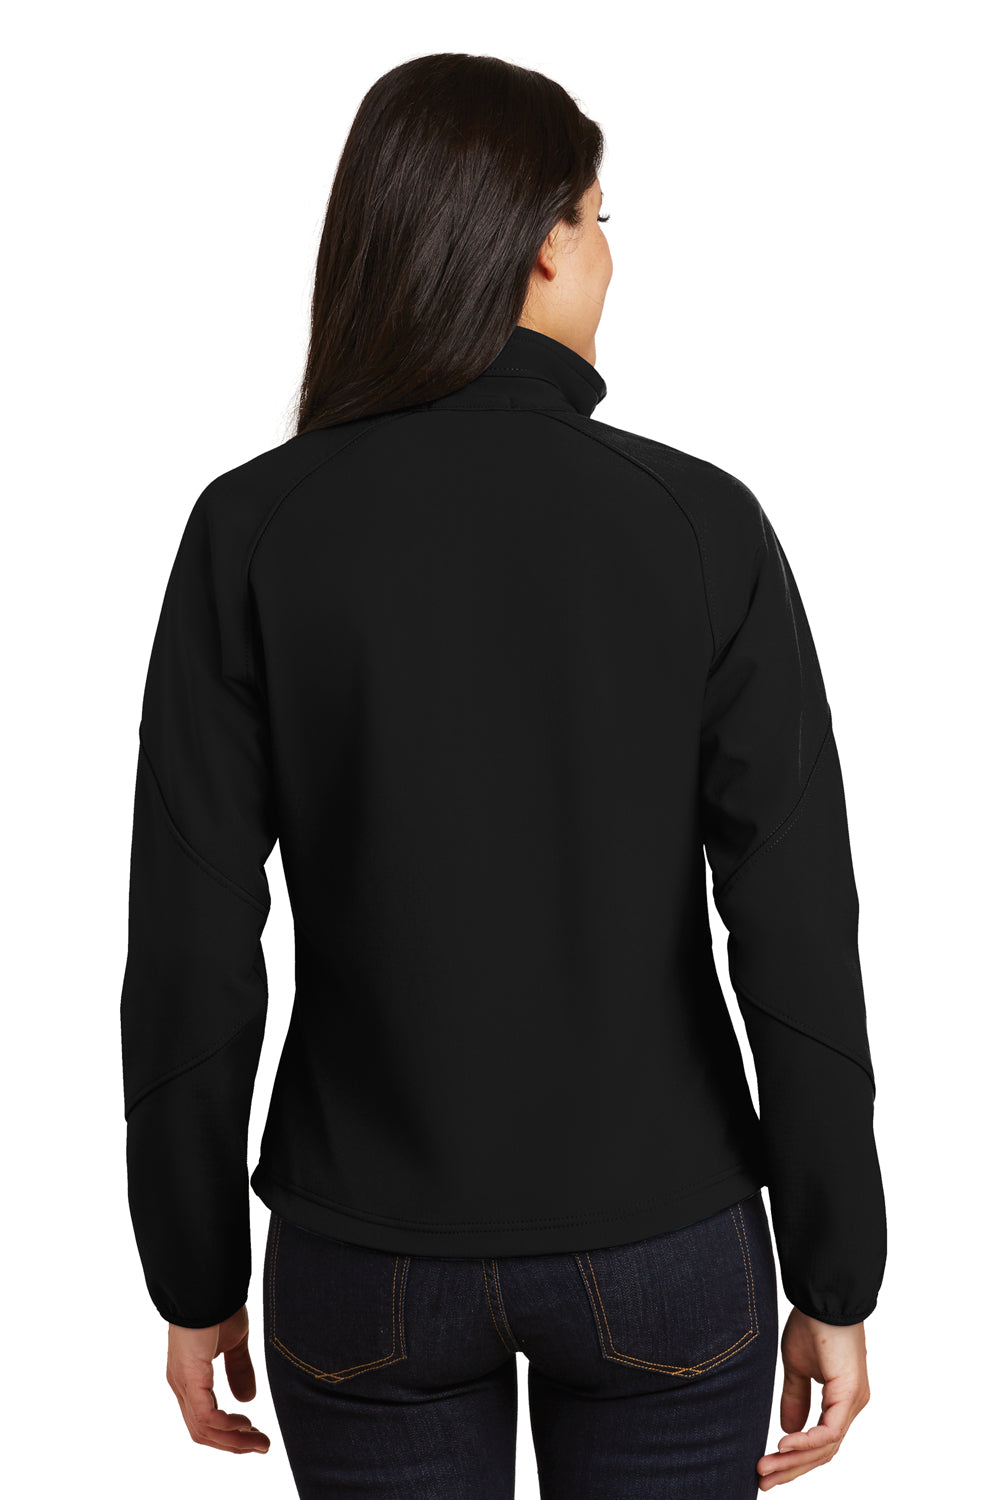 Port Authority L705 Womens Wind & Water Resistant Full Zip Jacket Black Back